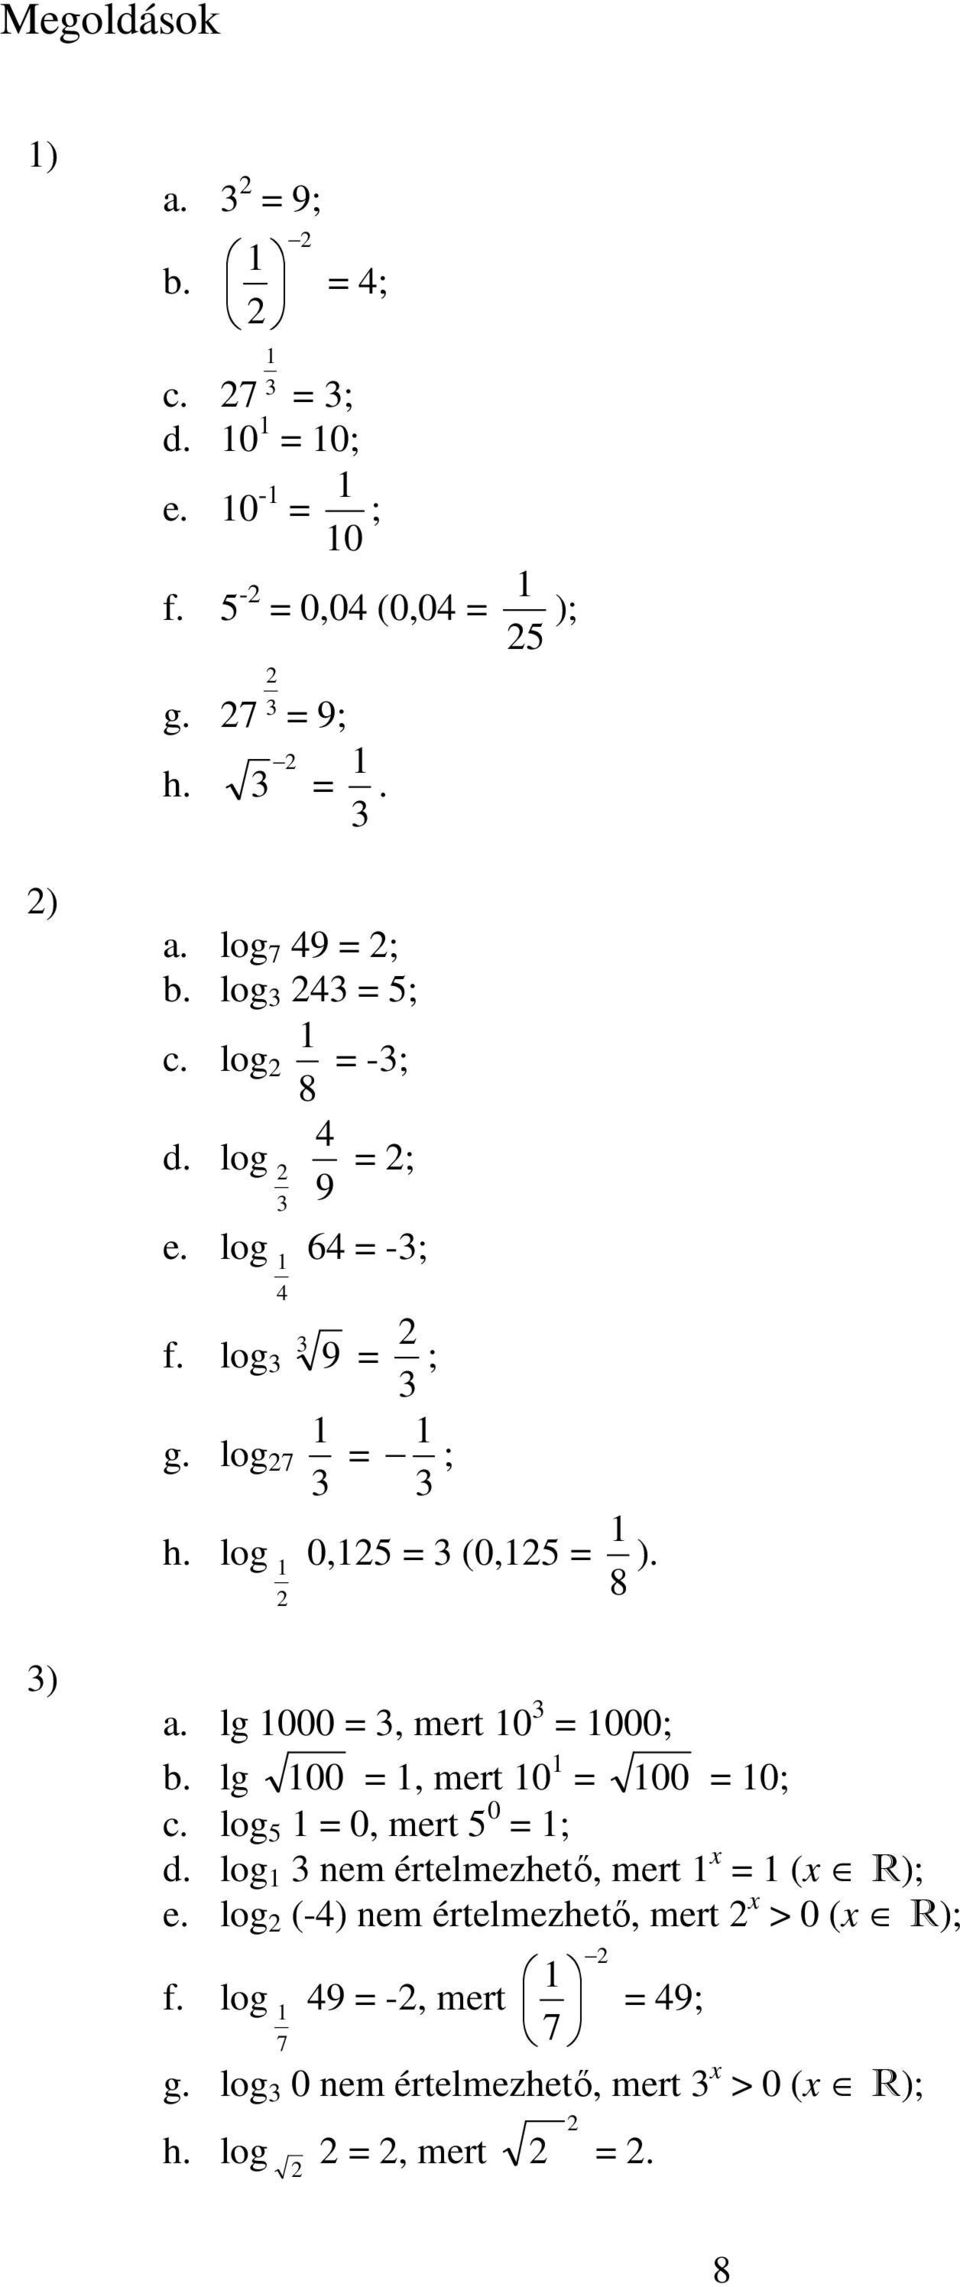 lg 00 =, mert 0 = 00 = 0 c log = 0, mert 0 = d log nem értelmezhető, mert x = (x R) e log (-4) nem